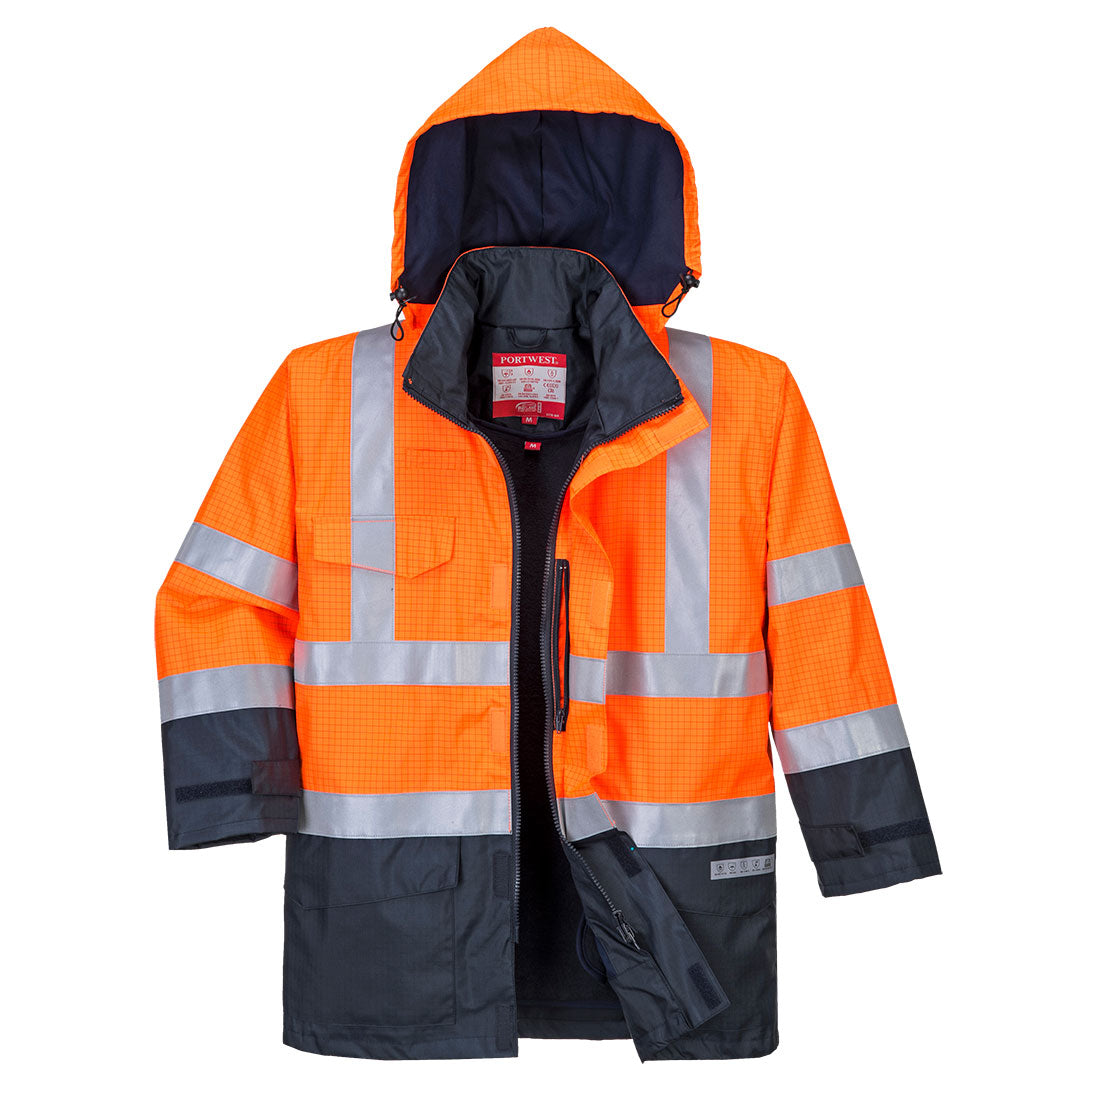 Bizflame Regen Warnschutz Multi-Norm Jacke